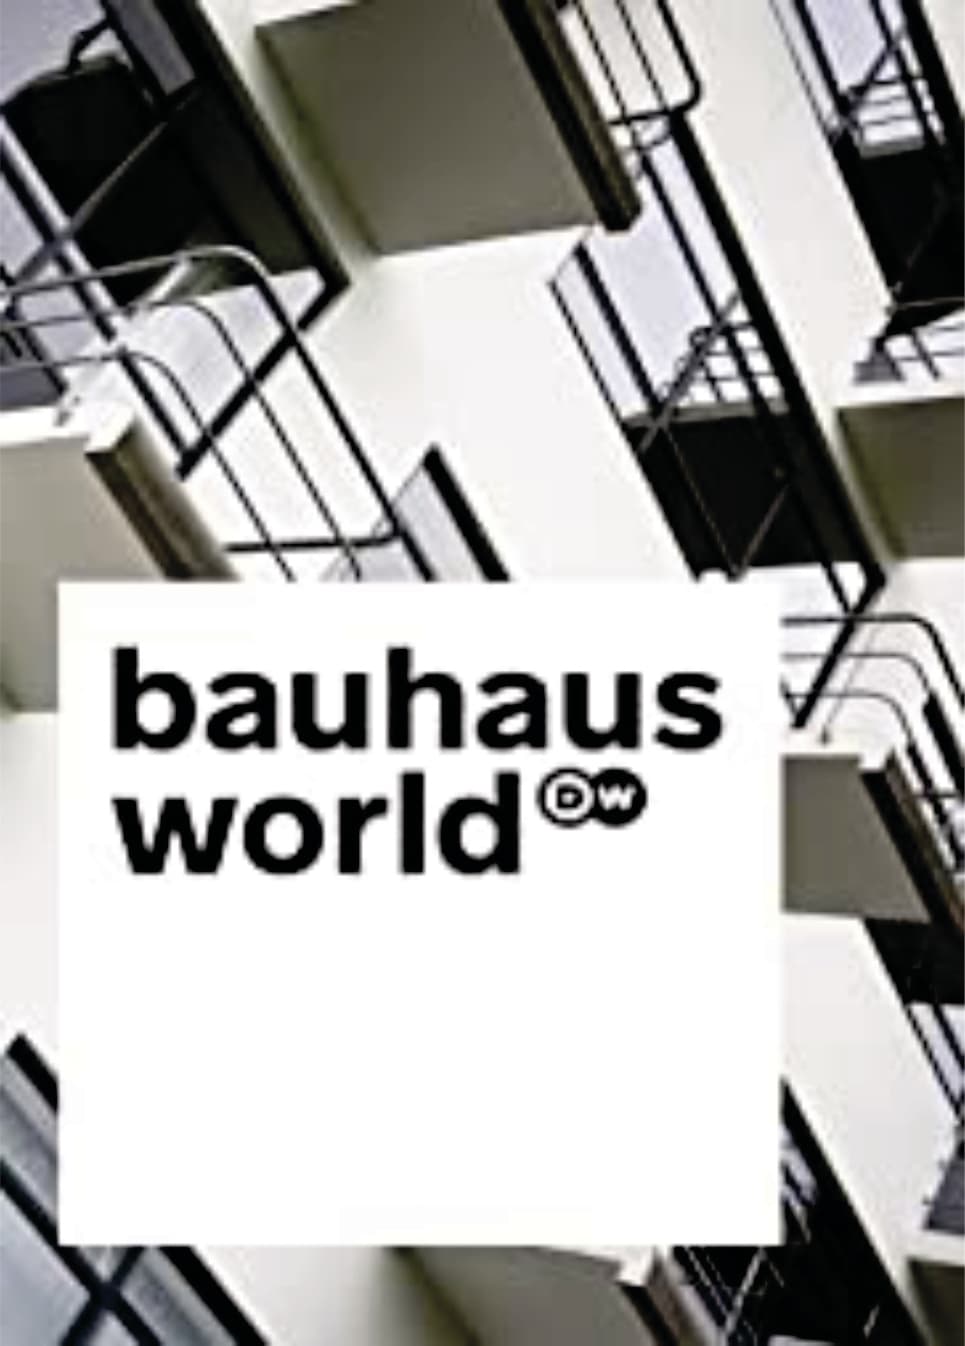 Bauhaus World